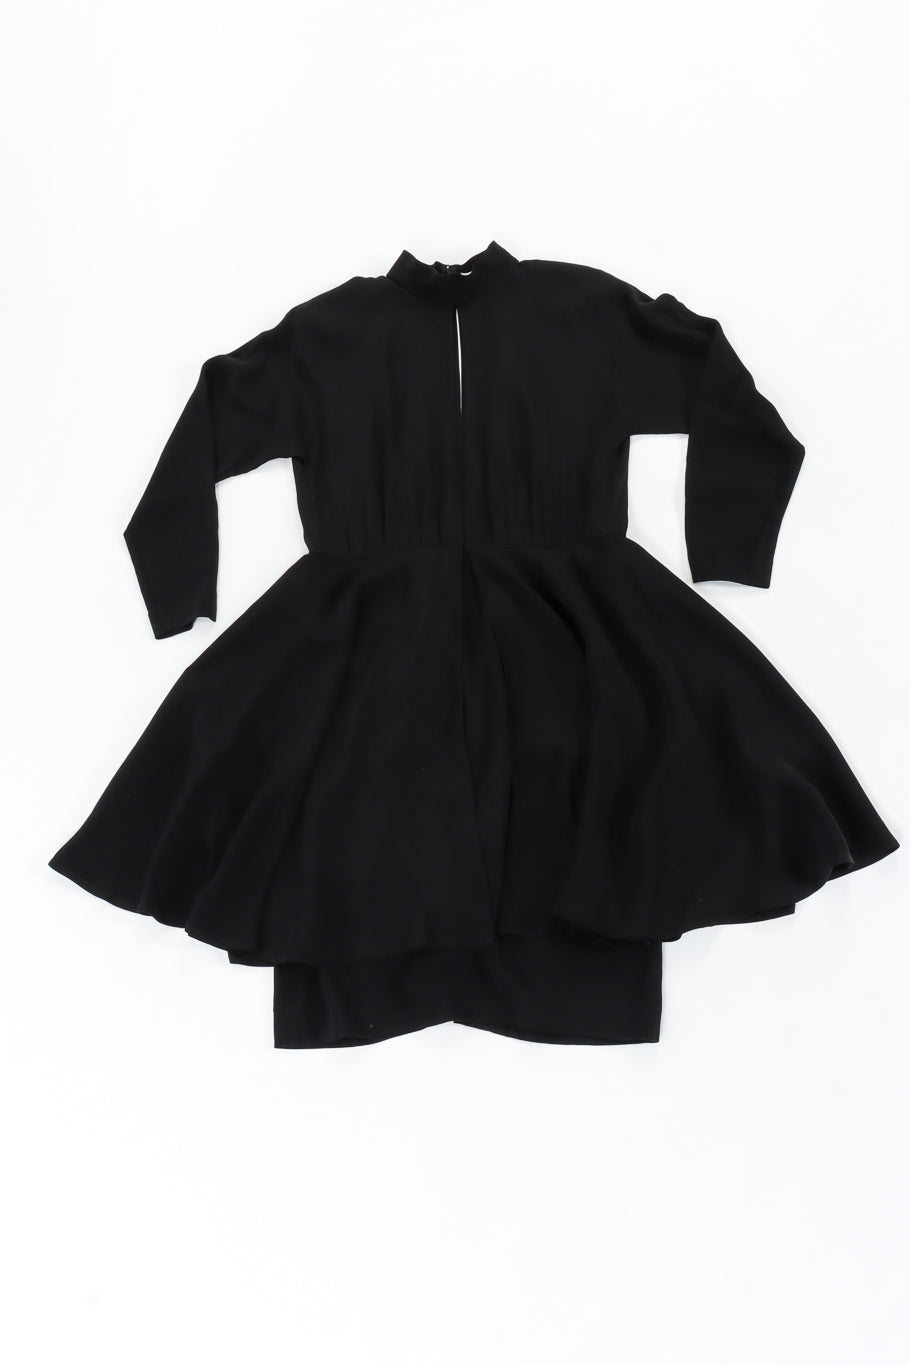 Vintage Pierre Cardin Tailored Panel Dress front dress flat lay @ Recess LA